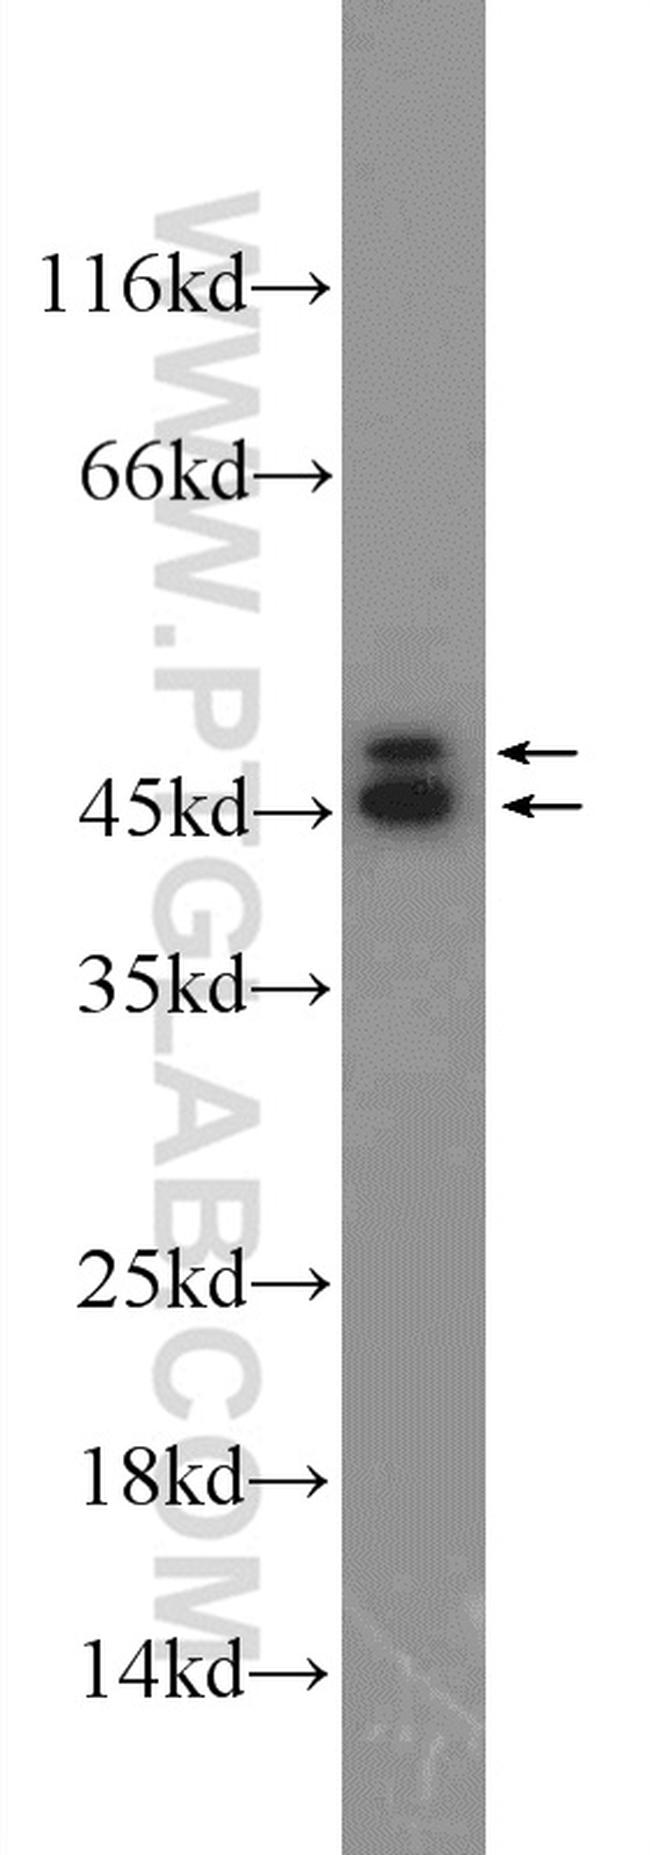 HNRNPD Antibody in Western Blot (WB)